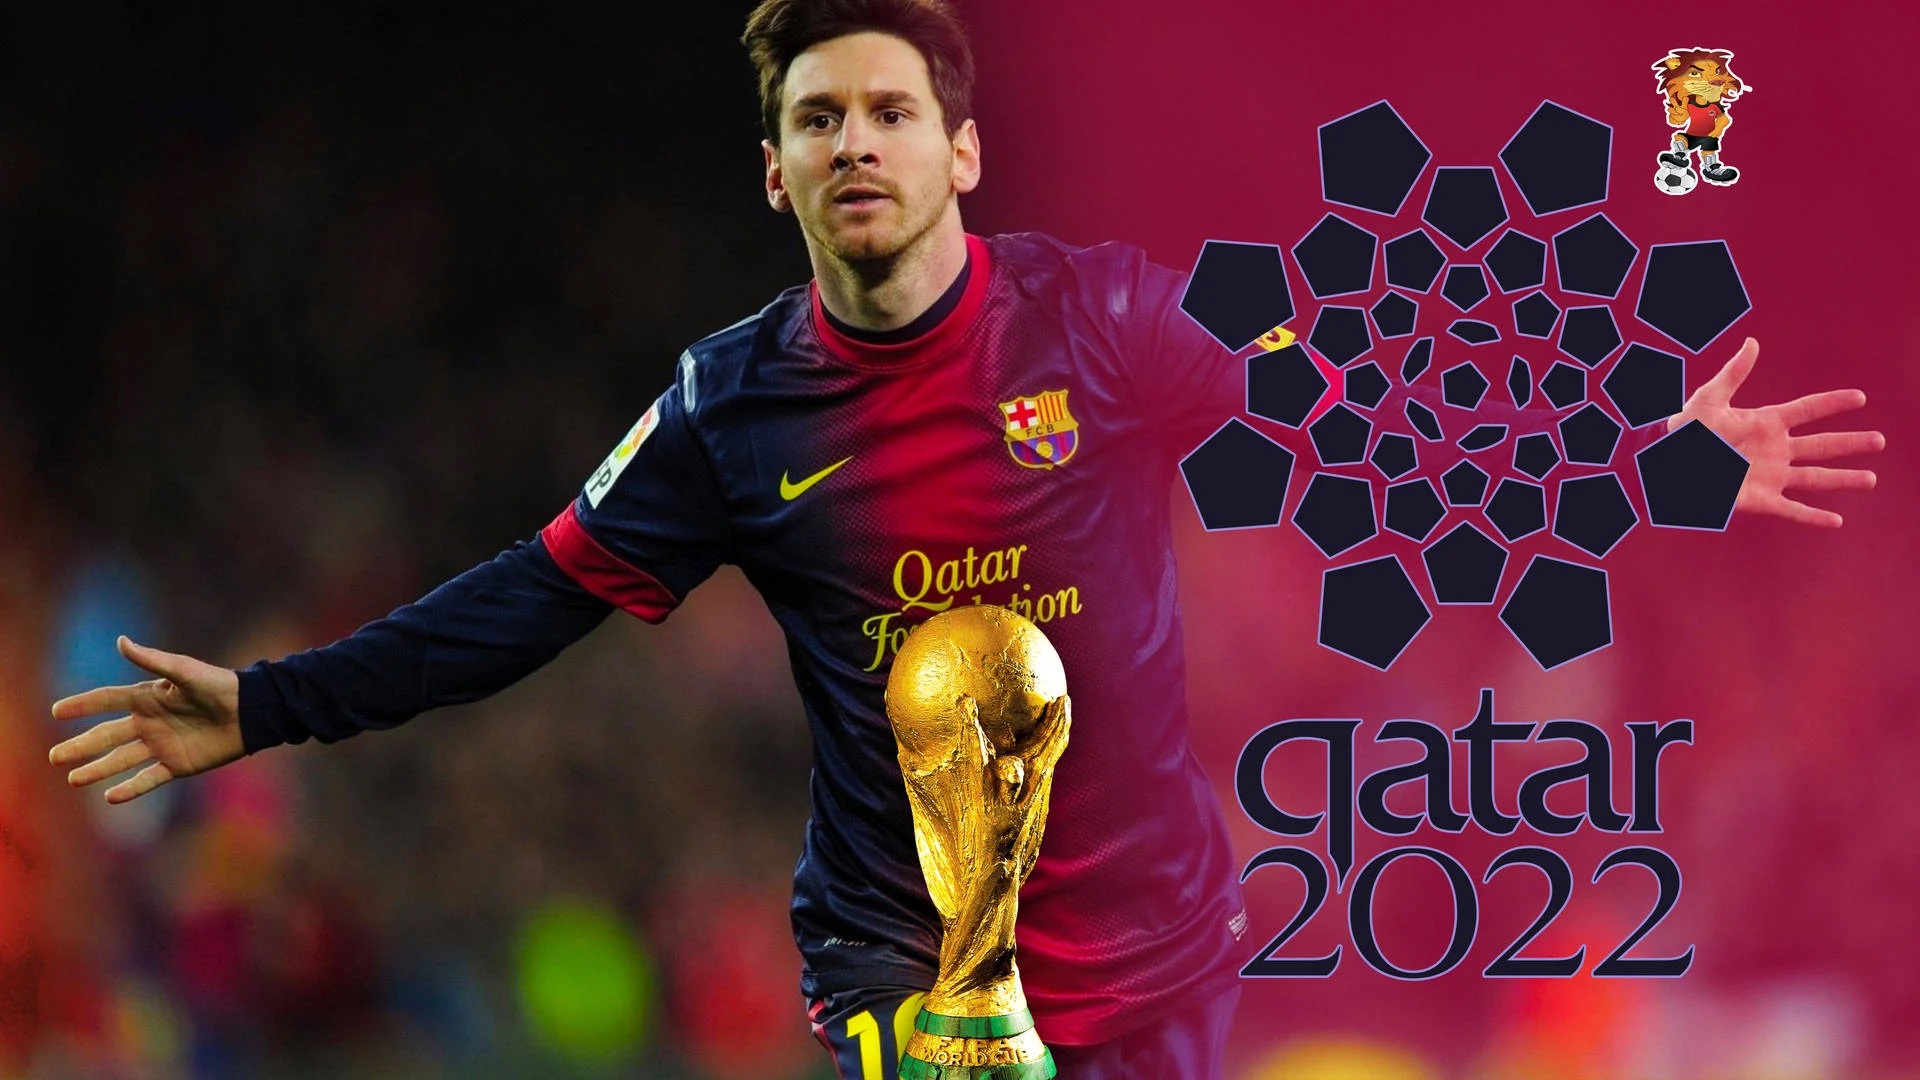 Messi World Cup 2022 Wallpaper - VoBss